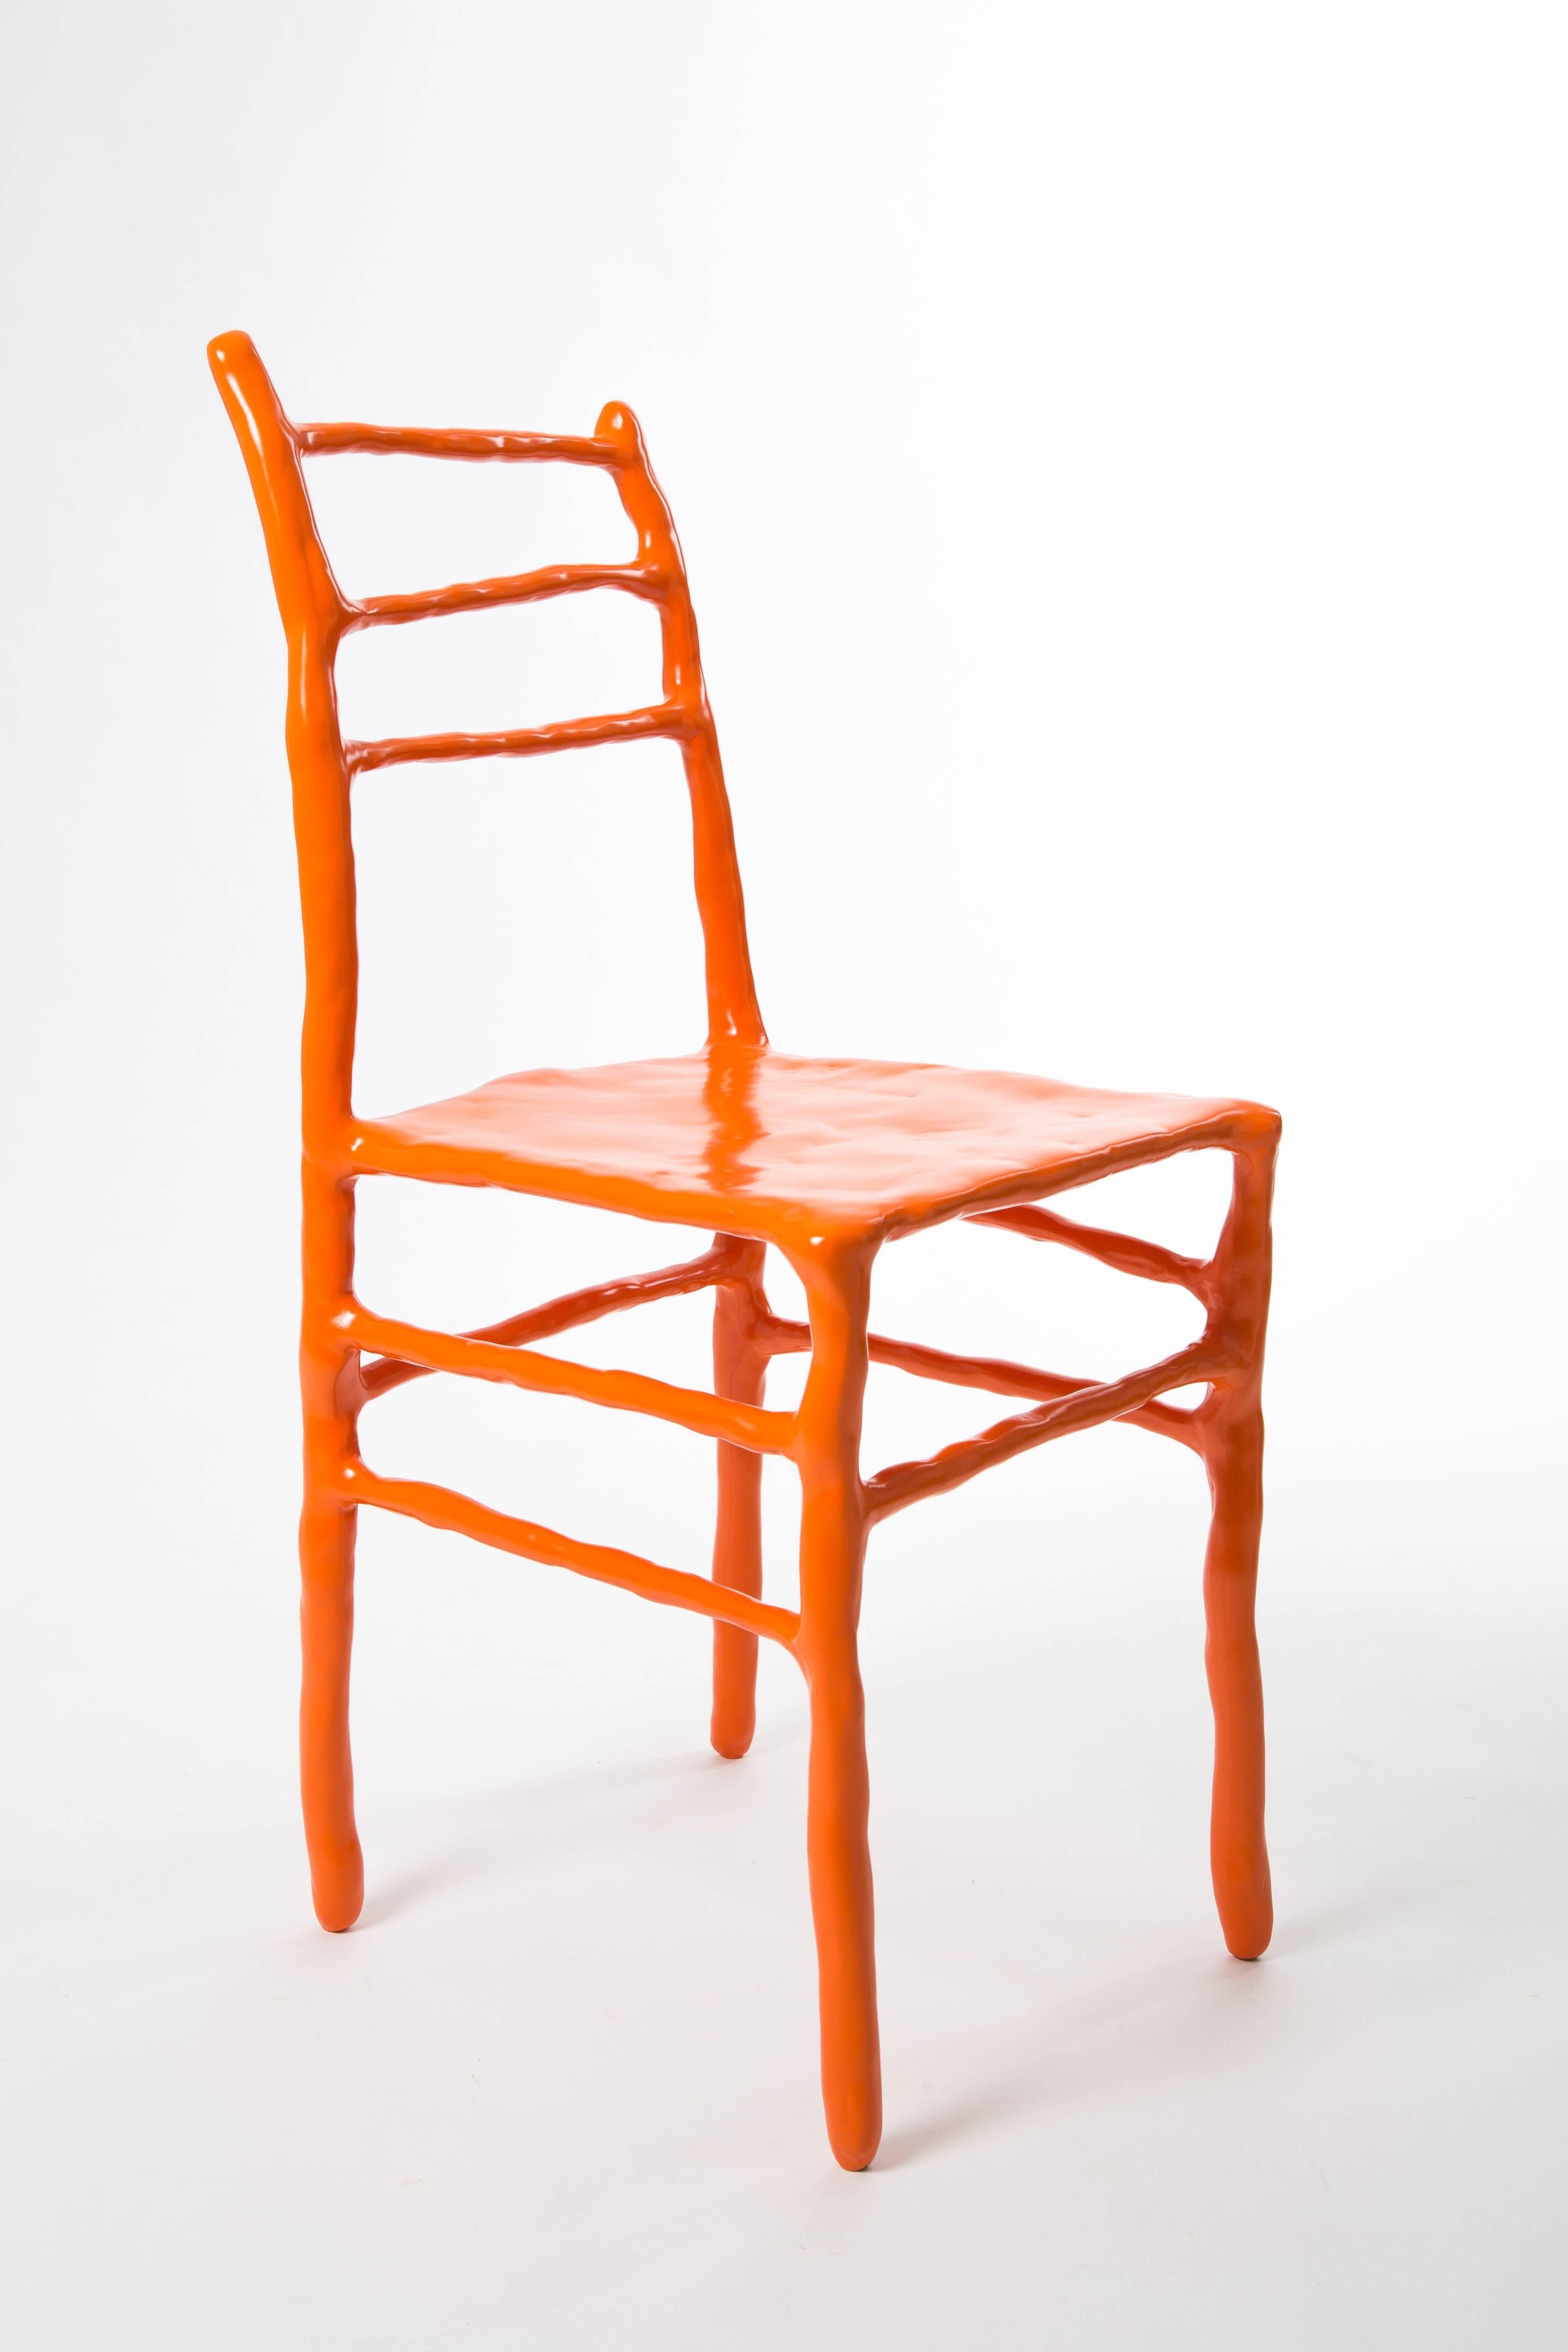 Maarten Baas Clay Chair Limited Edition Basel Chair 2007 Orange For Sale 5